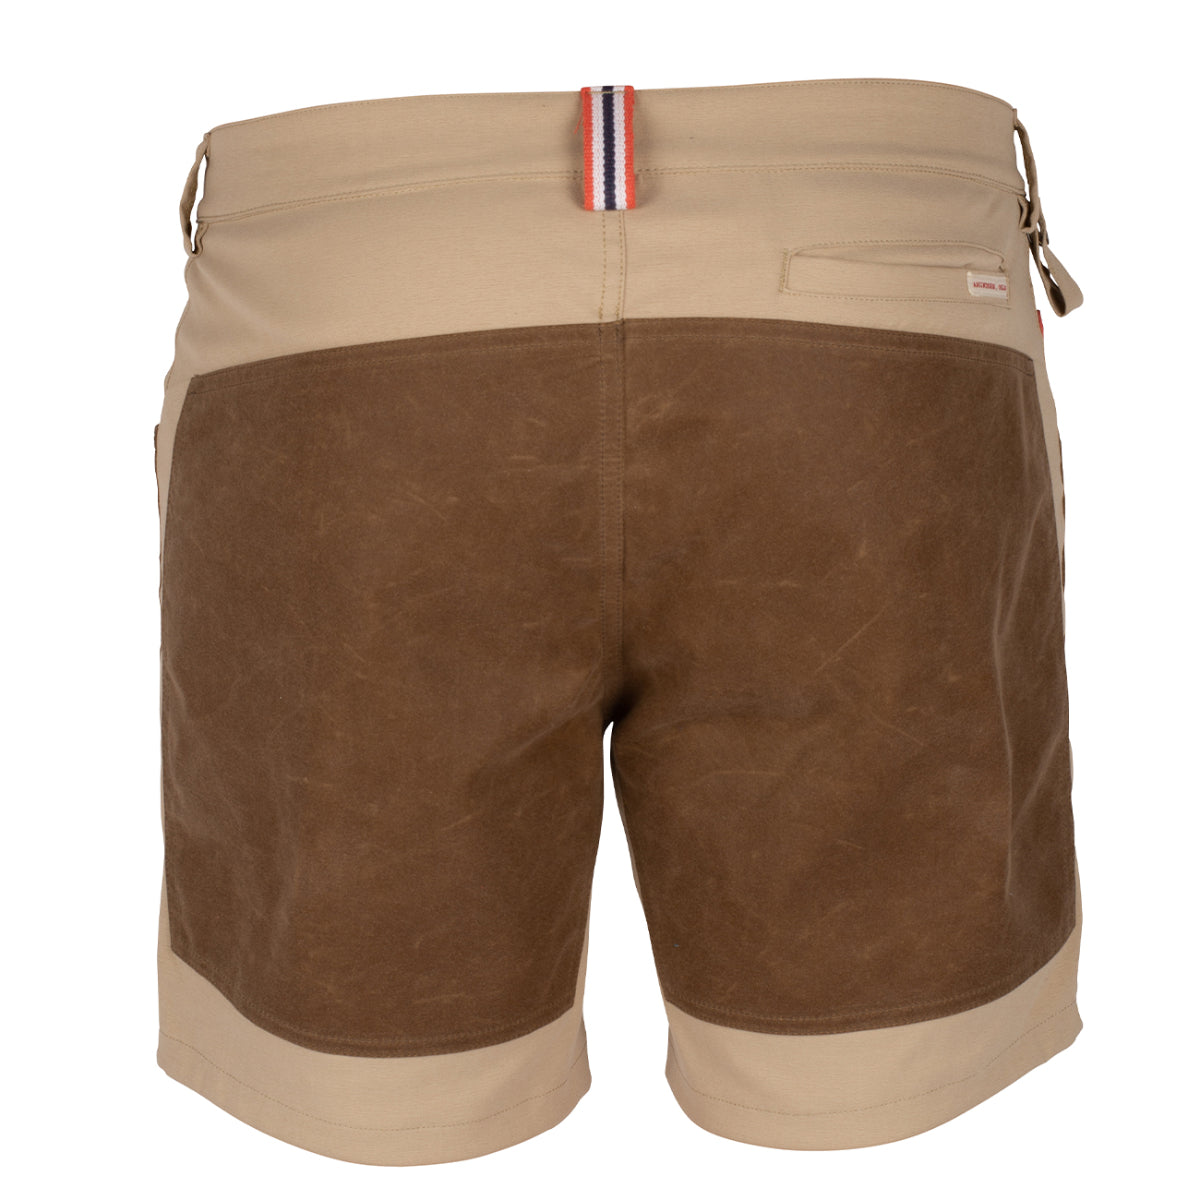 Amundsen Sports - Men's 7 Incher Field Shorts - Desert / Tan